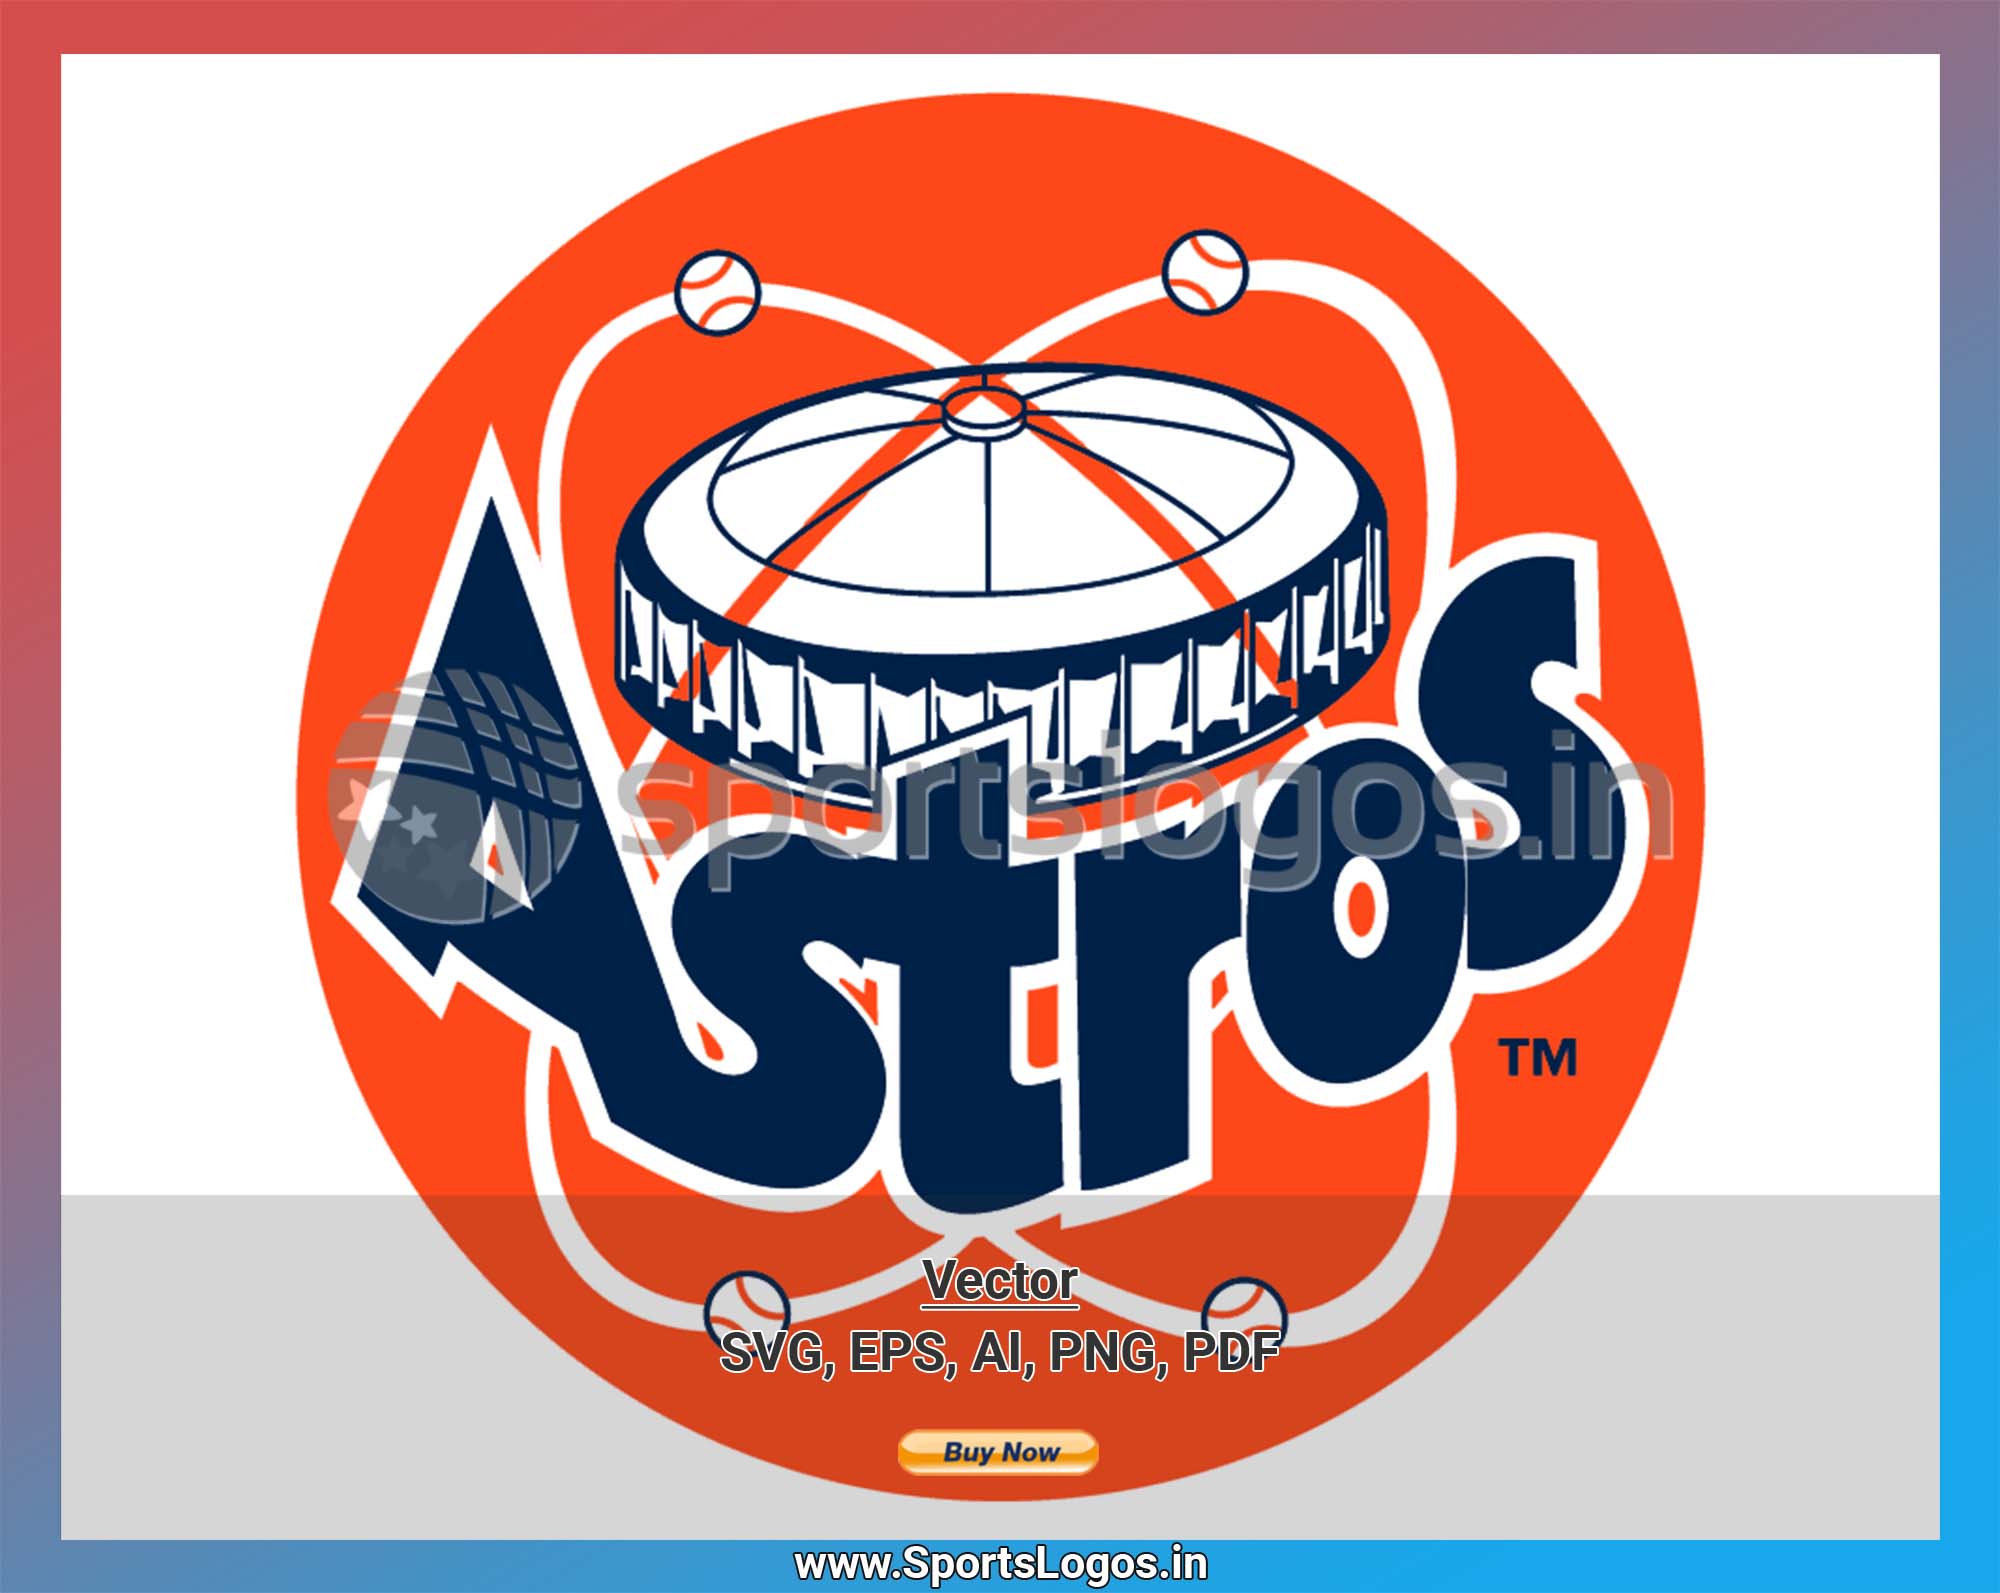 Astros Baseball SVG, Vintage Houston Astros SVG